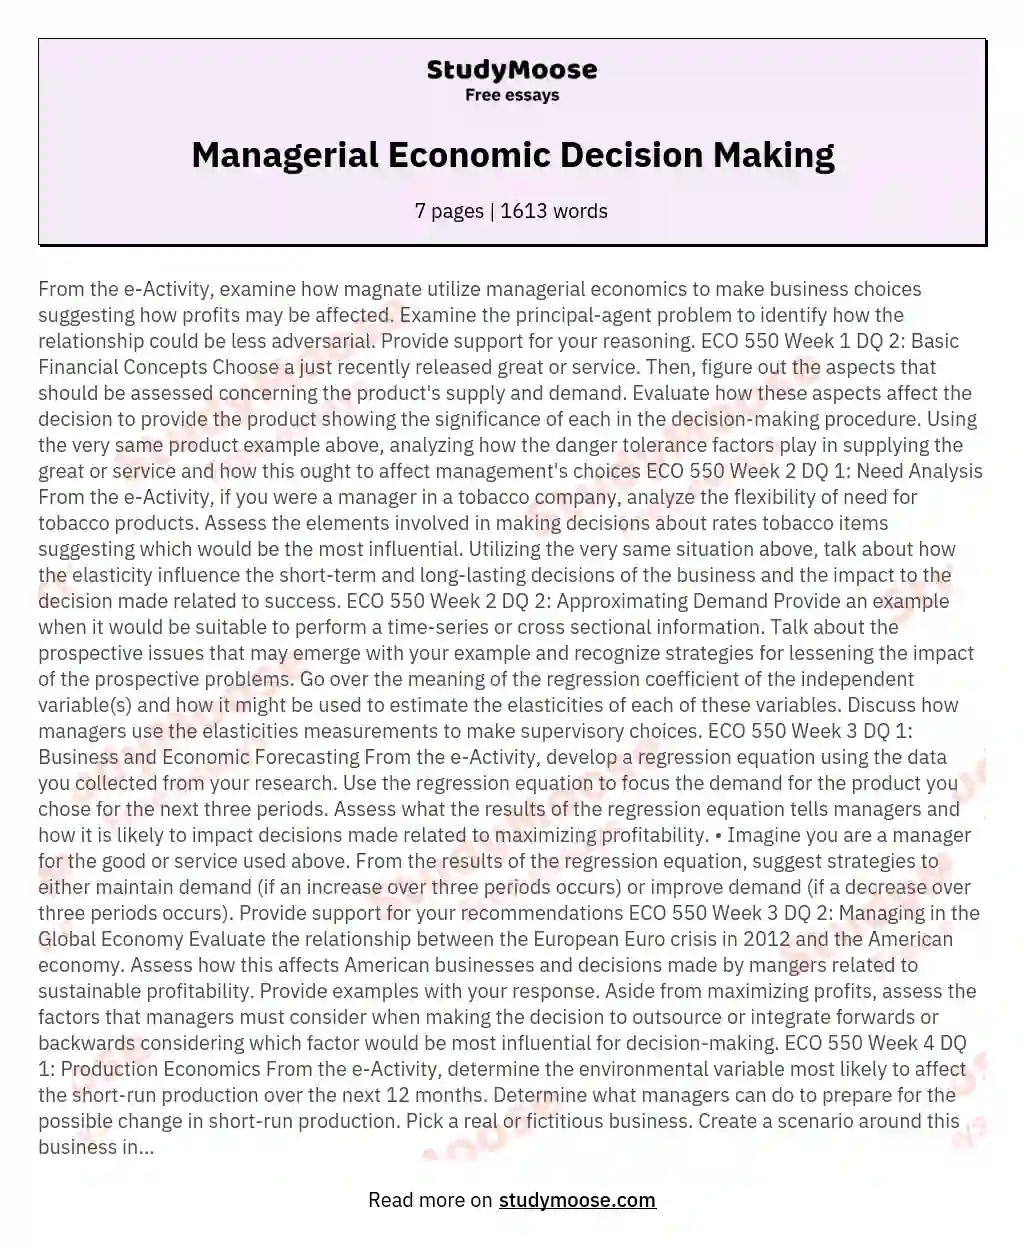 Managerial Economic Decision Making essay